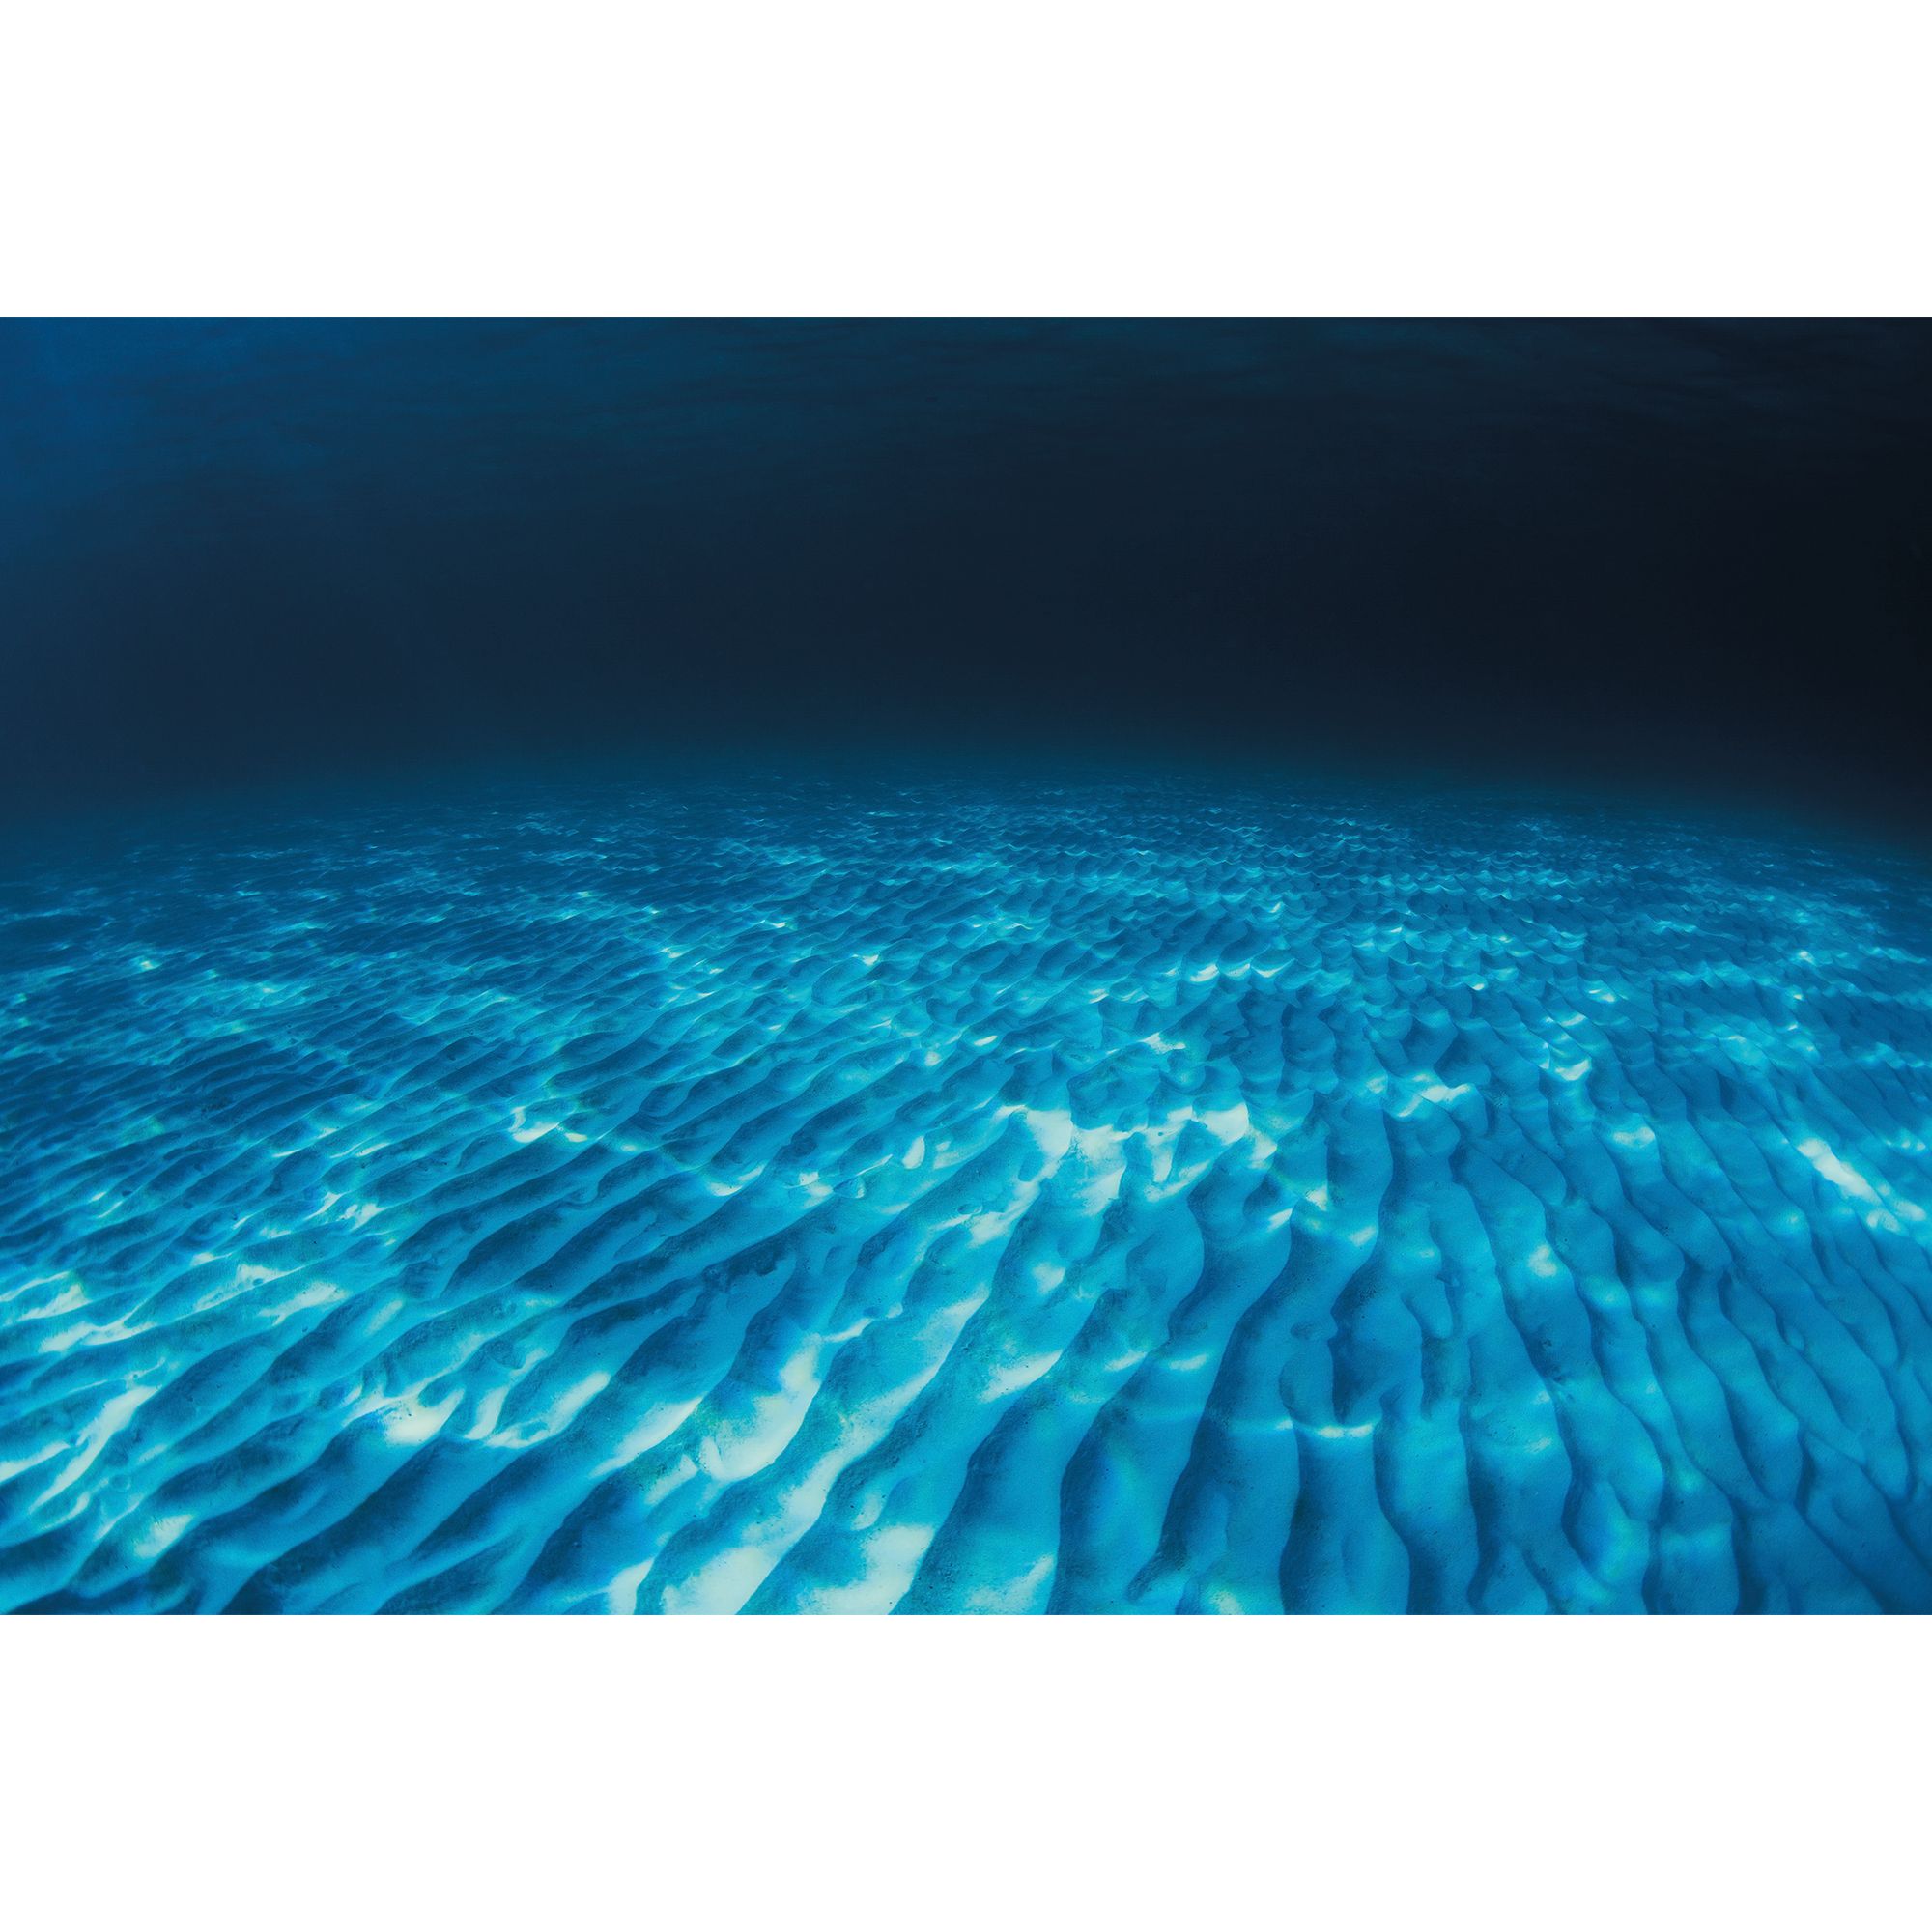 Aquarium Backgrounds for Fish Tanks | PetSmart